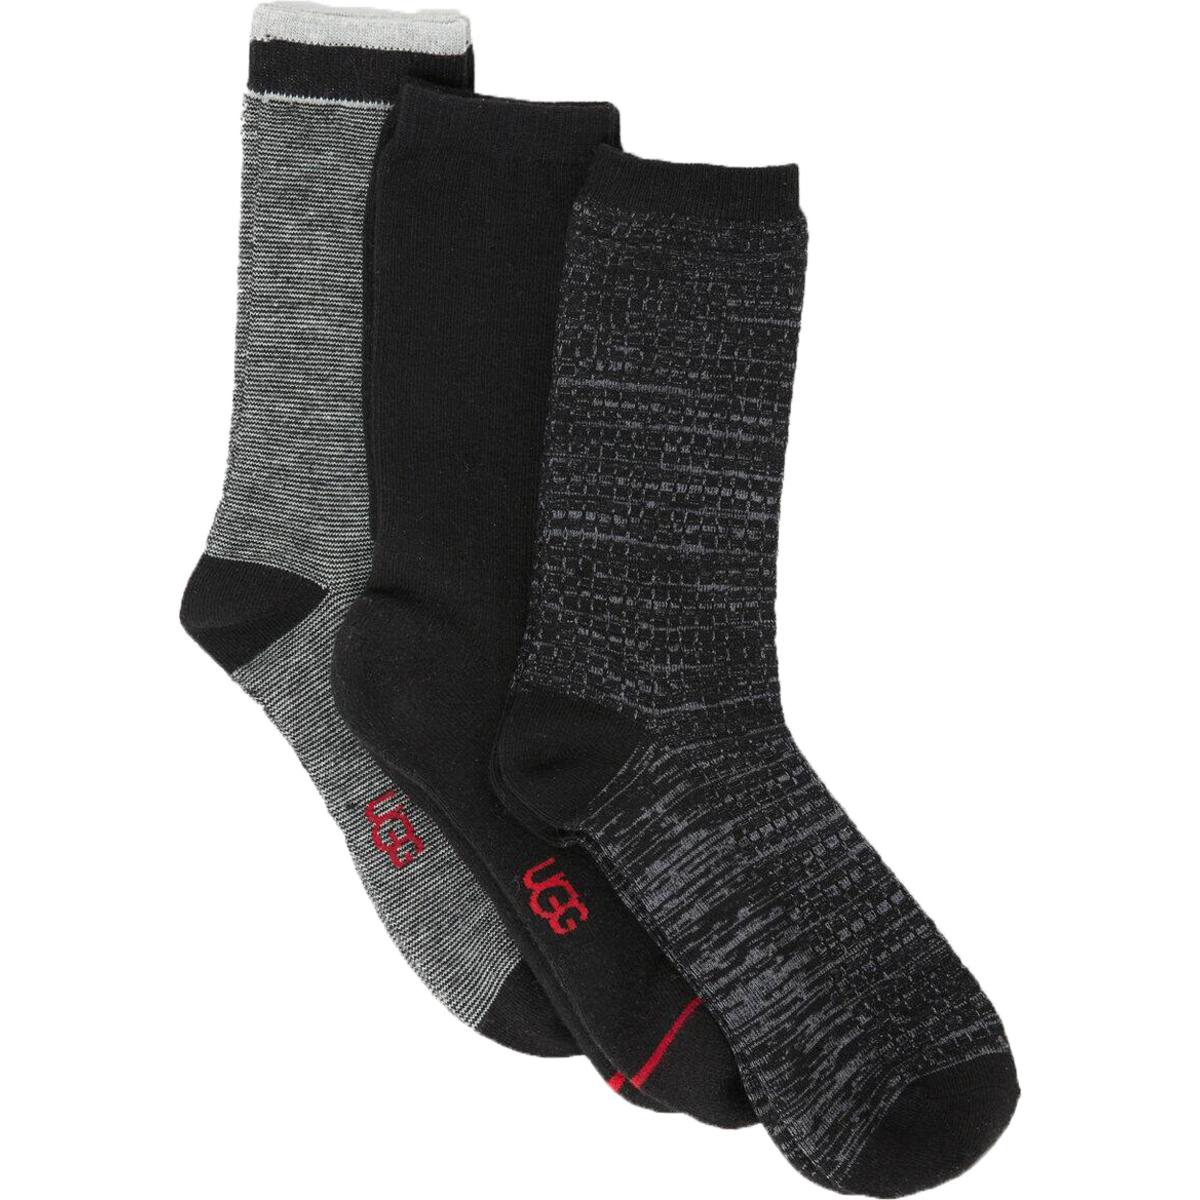 Ugg Mens Otto Black 3 Pack Striped Set Crew Socks 10-13 BHFO 5988 | eBay